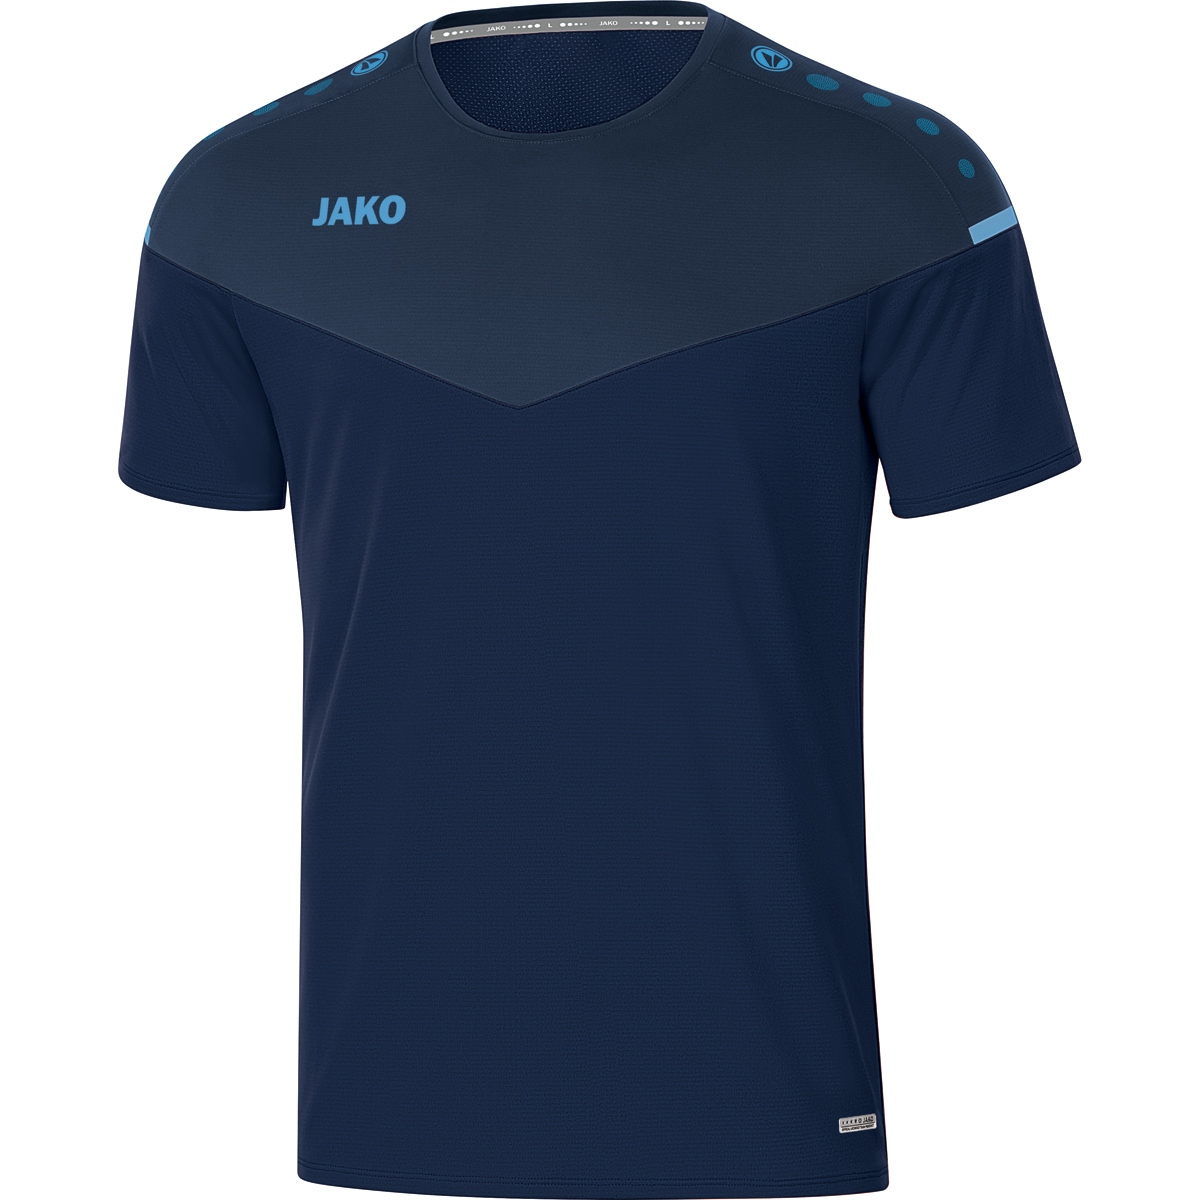 S, Gr. JAKO 6120 Champ T-Shirt Herren, marine/darkblue/skyblue, 2.0